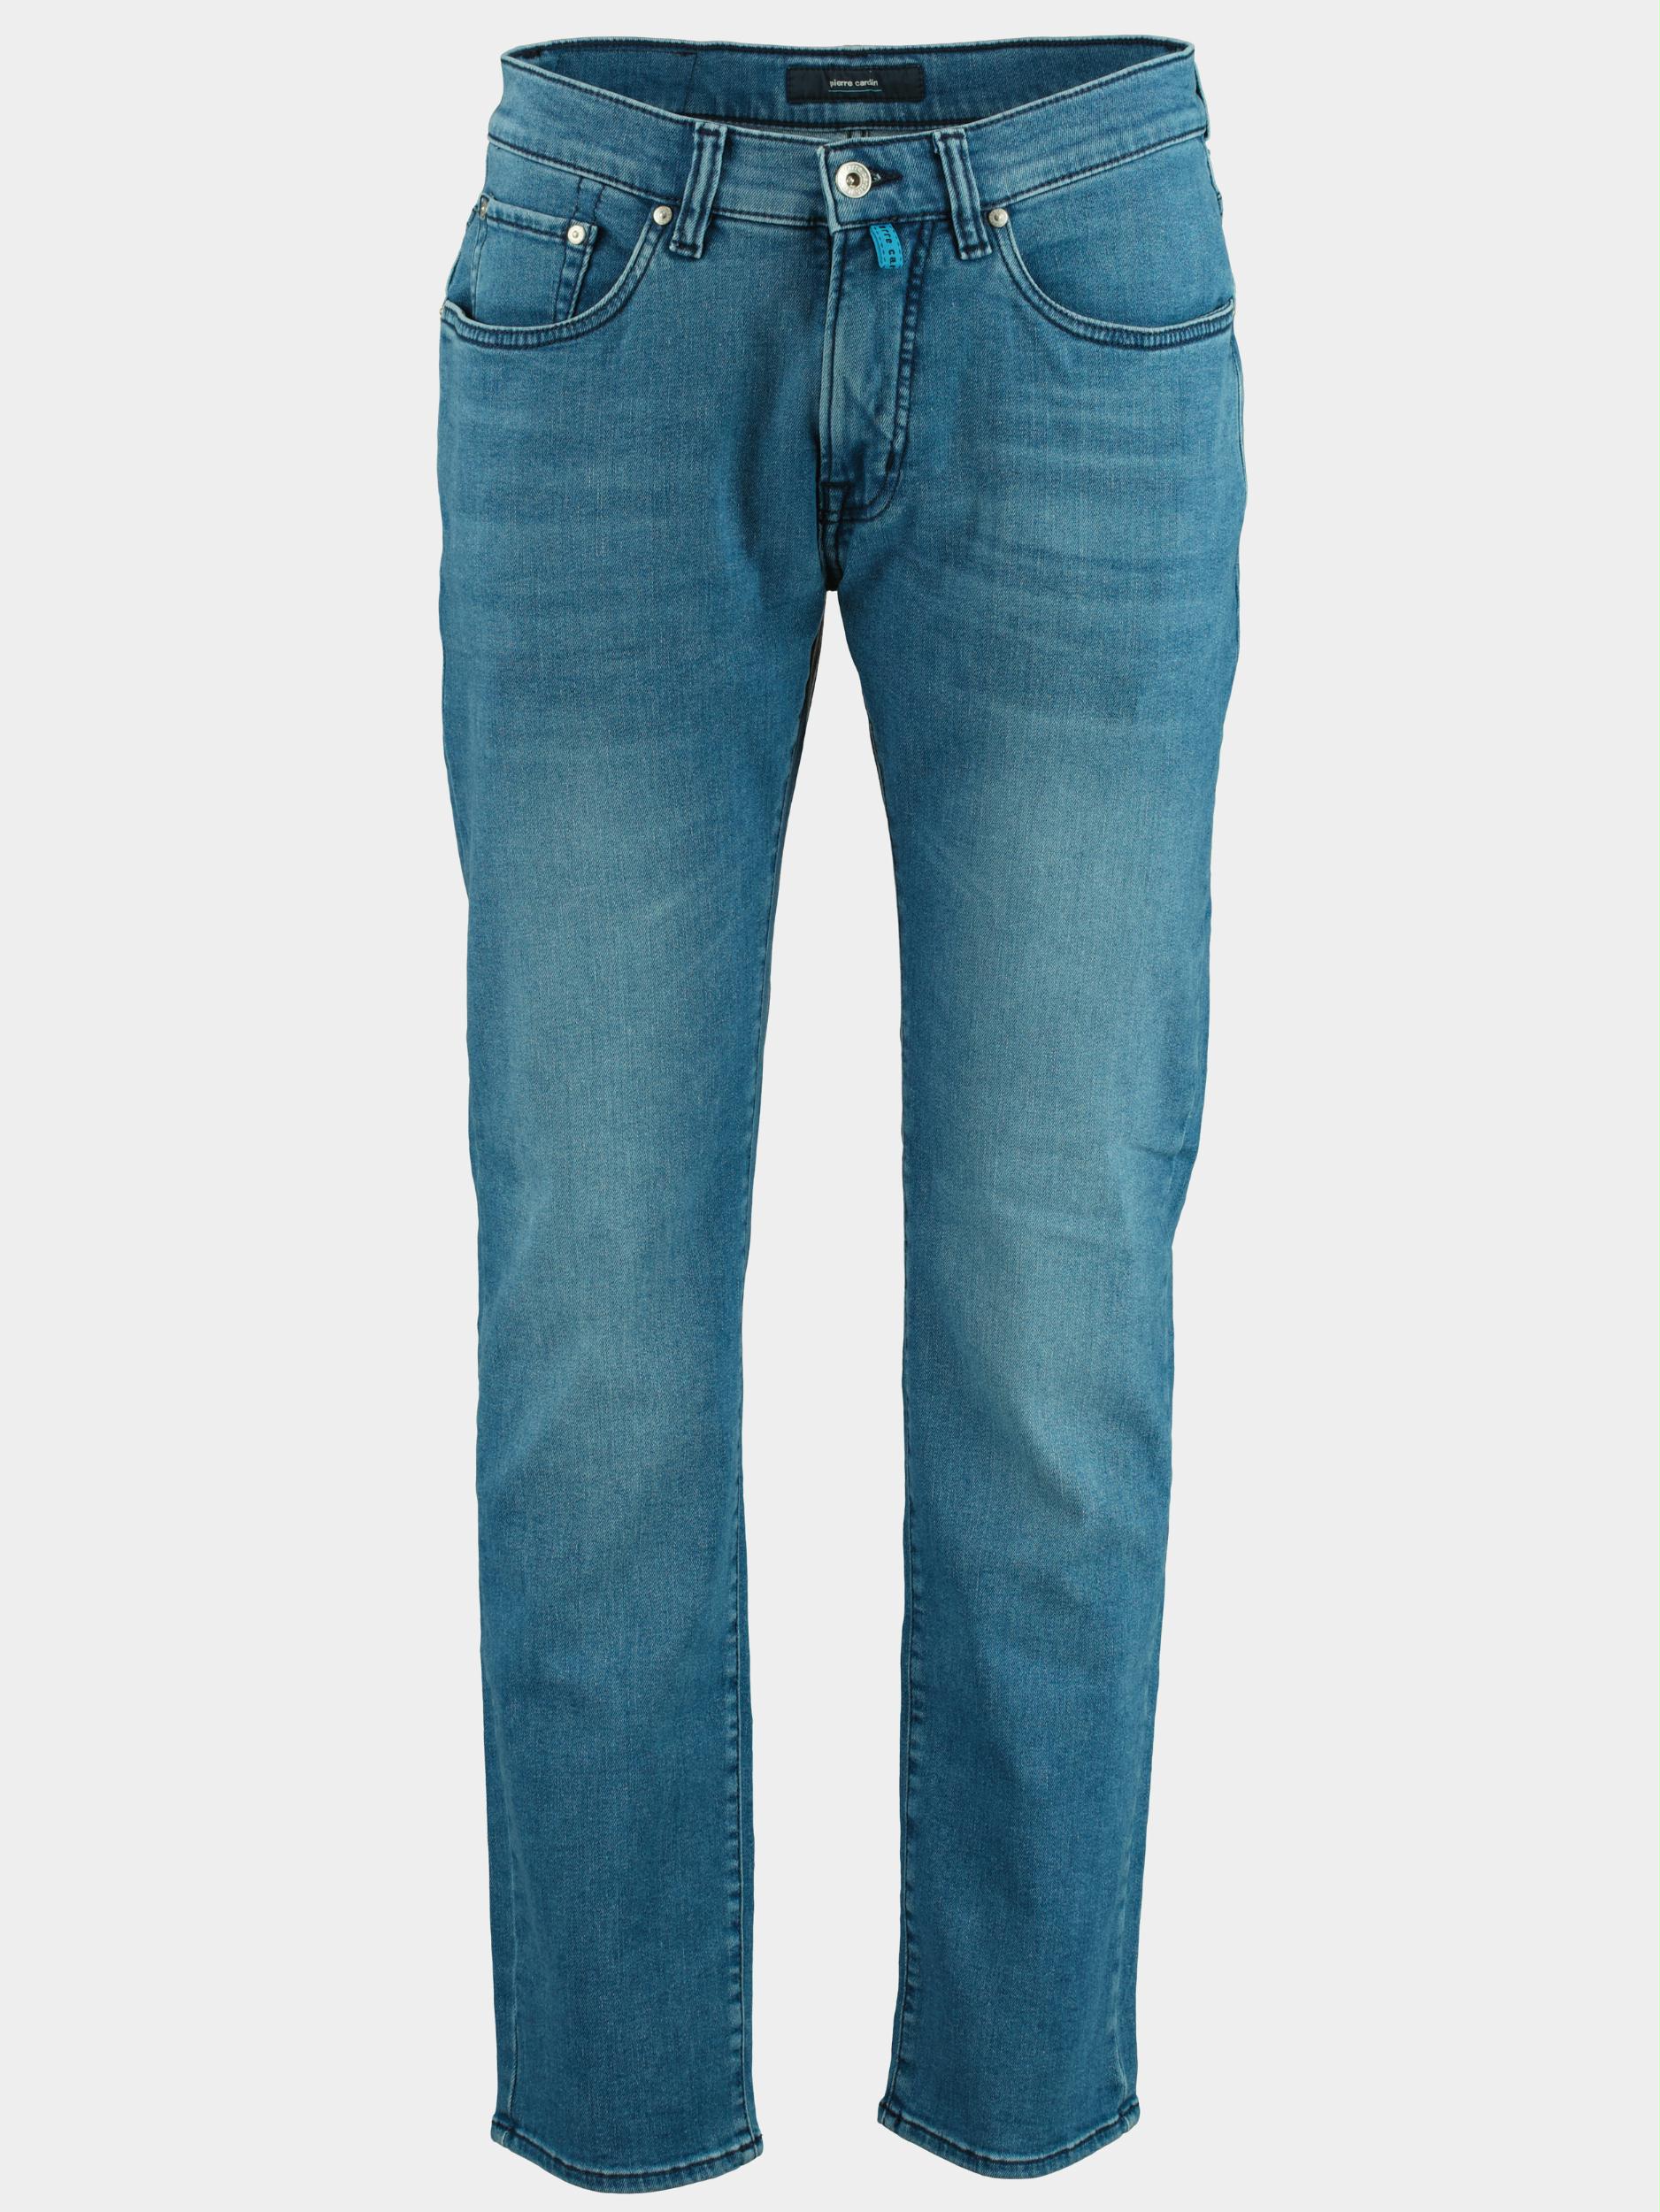 Pierre Cardin 5 Pocket Jeans Blauw slim fit jeans Antibes C7 30030.7715 6845